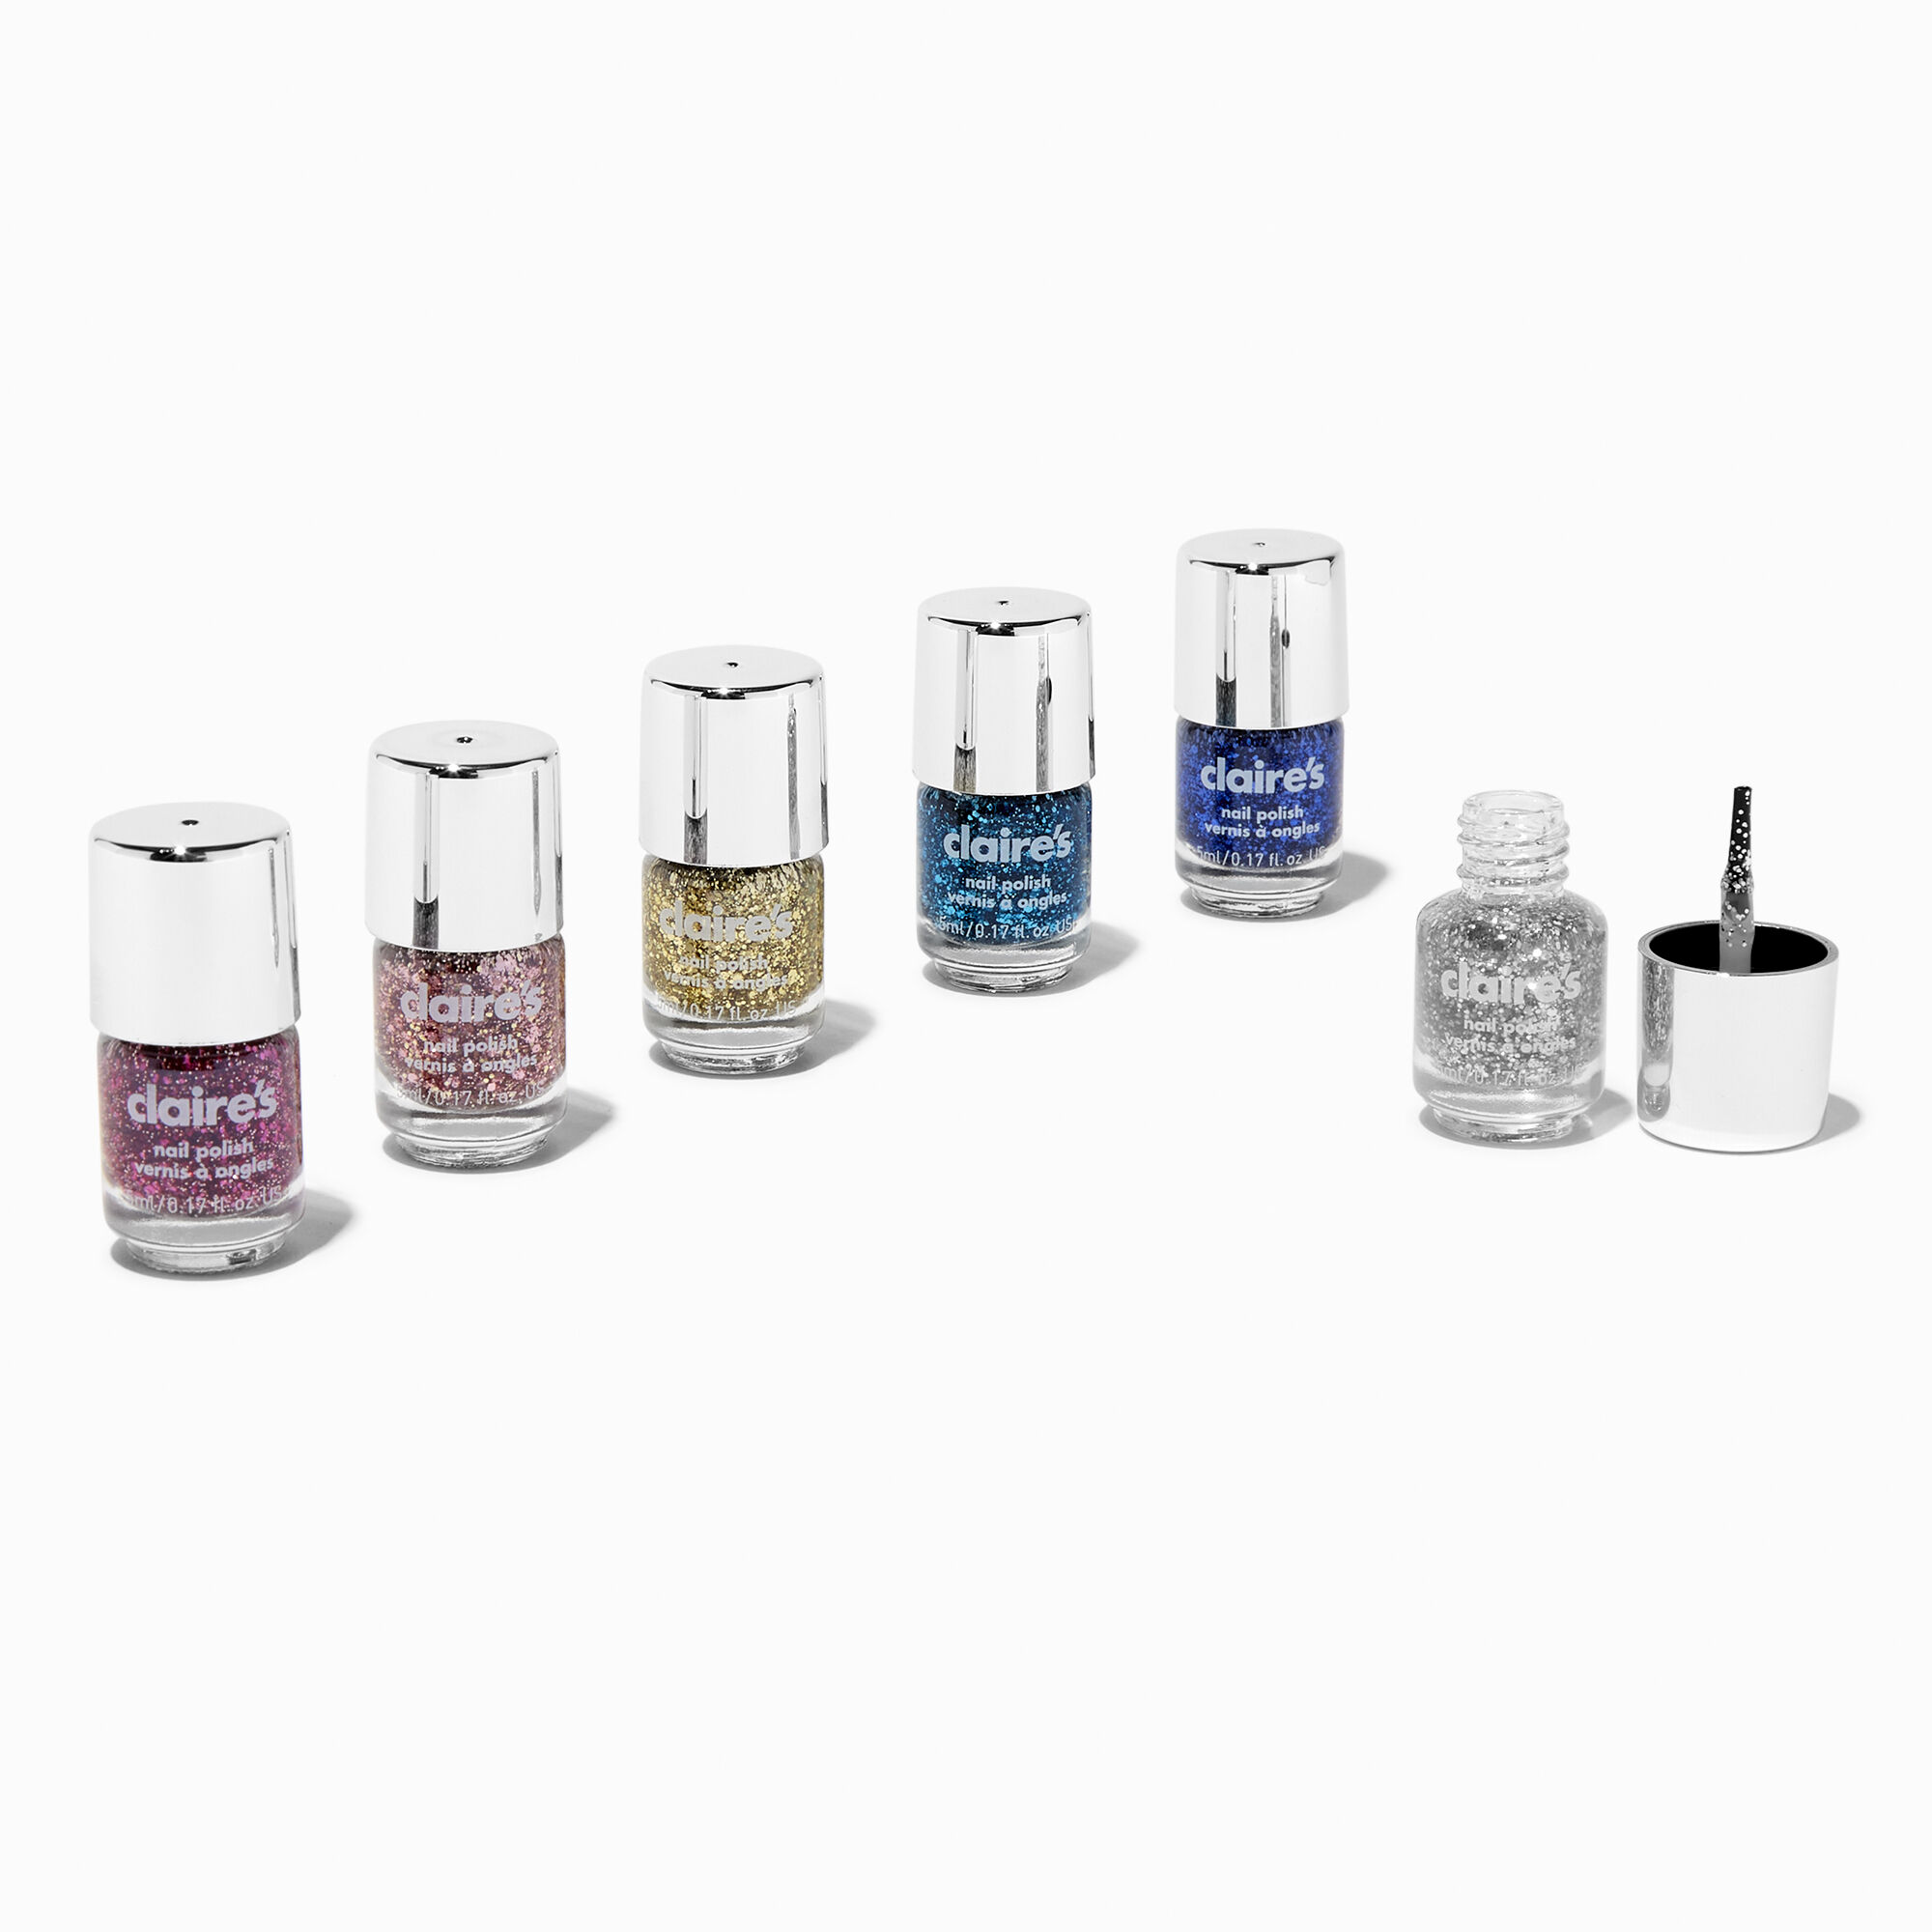 claire's 6 pack pastel mini nail polish set review